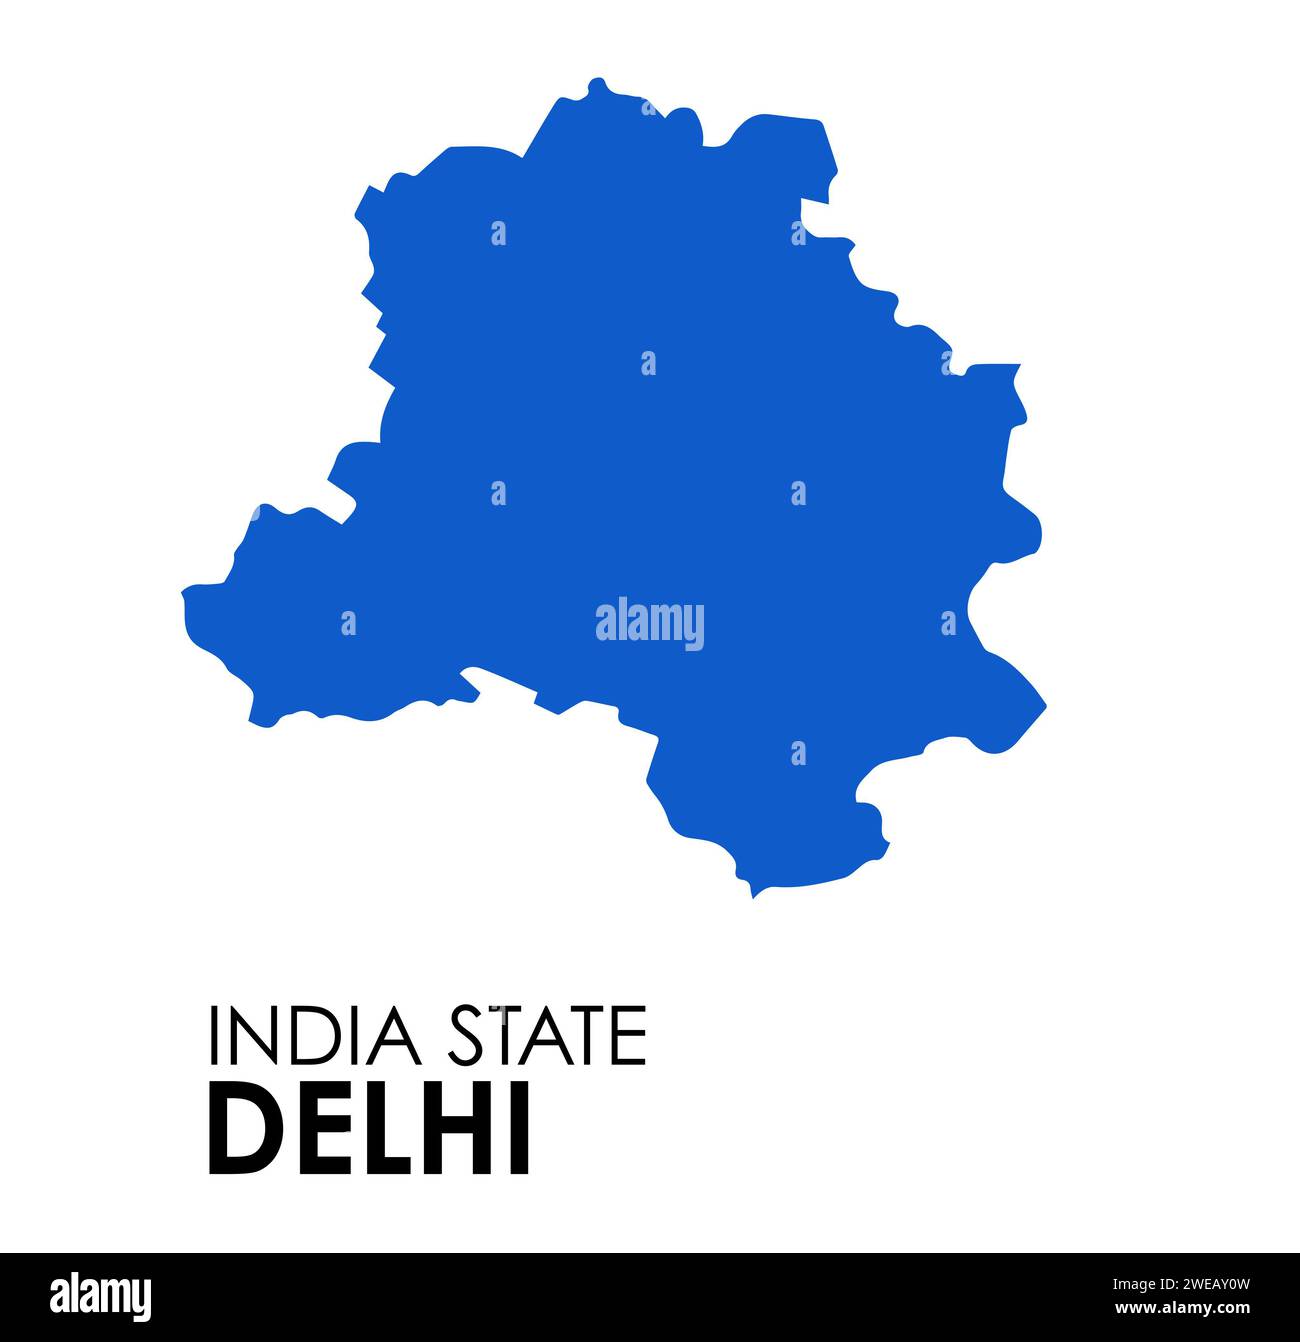 Delhi carte de l'état indien. Illustration vectorielle de carte Delhi. Carte vectorielle Delhi sur fond blanc. Banque D'Images